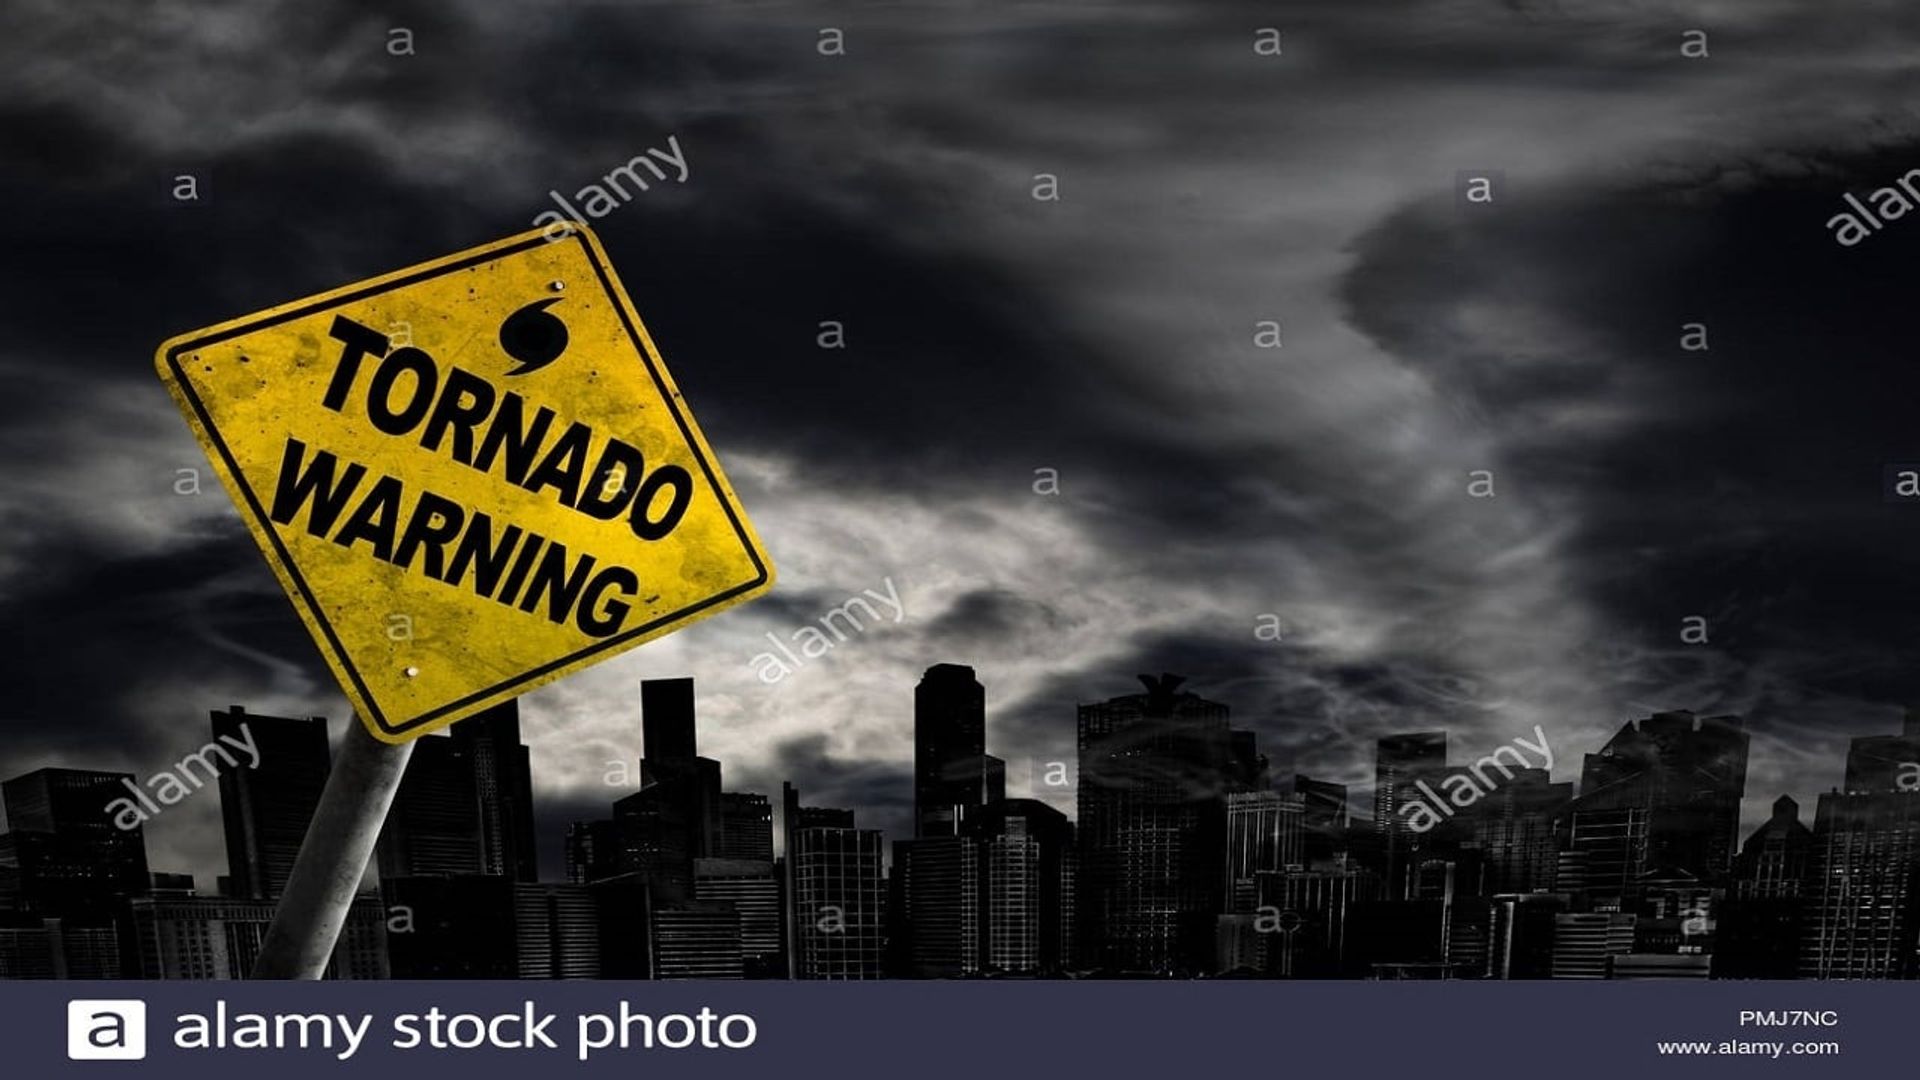 Tornado Warning background